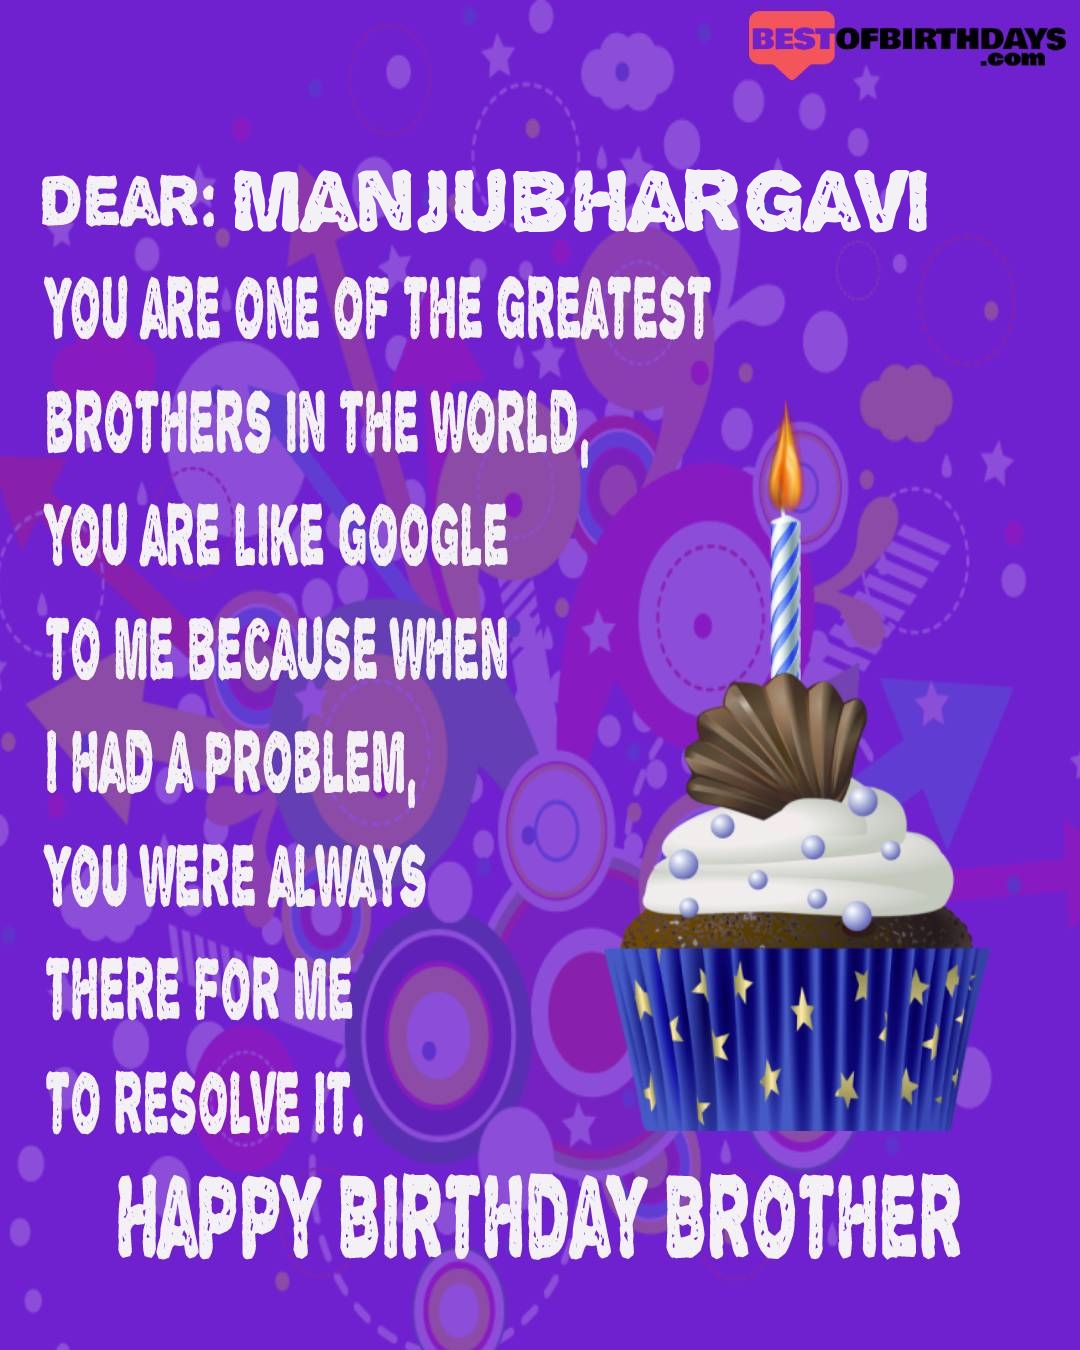 Happy birthday manjubhargavi bhai brother bro